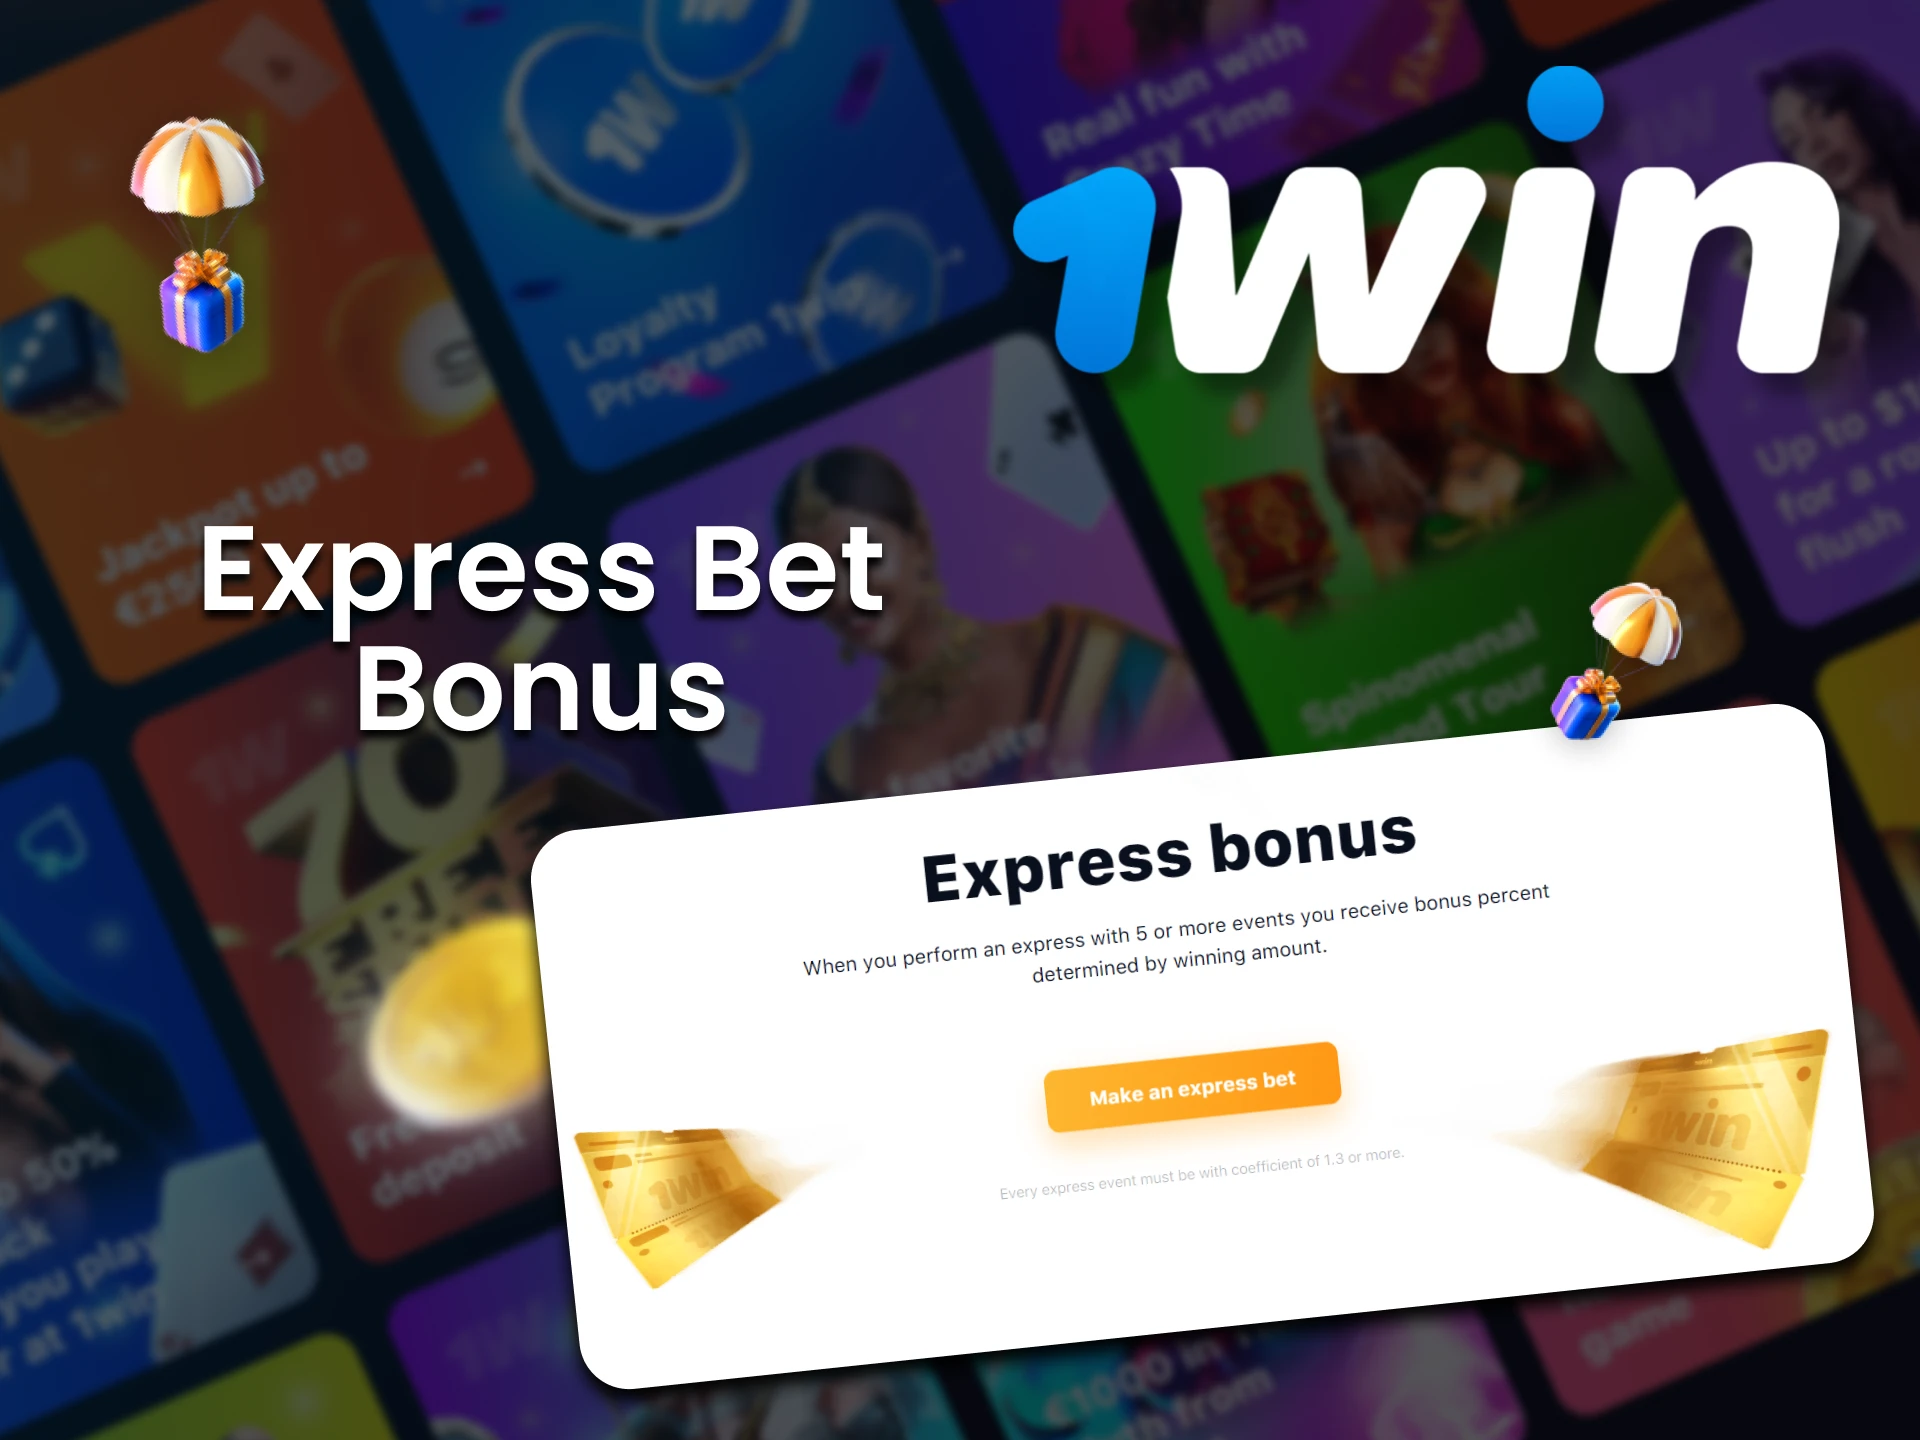 Receive Express bonus for 1Win kabaddi betting.